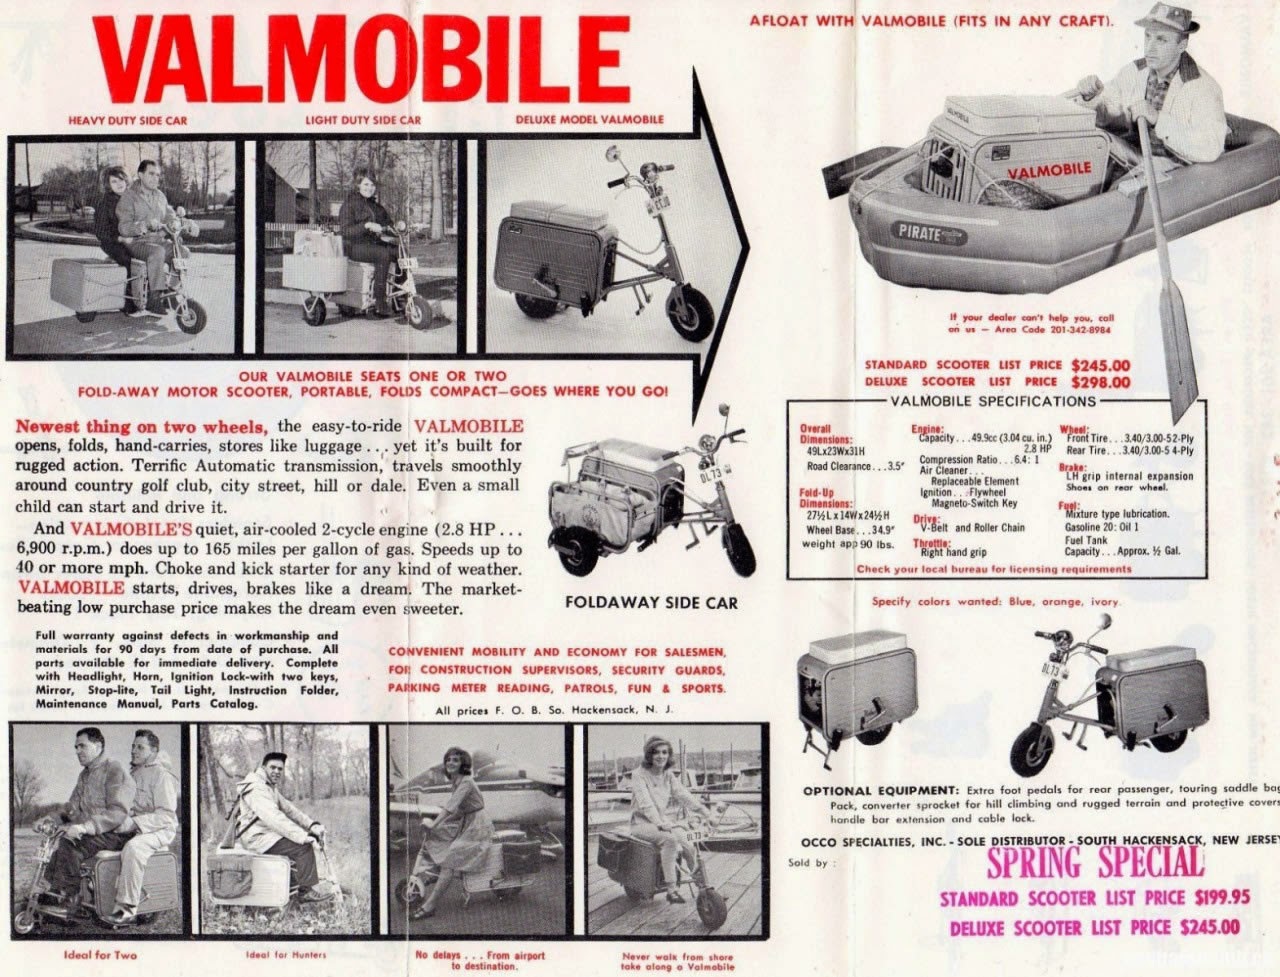 Valmobile Folding Motor Scooter